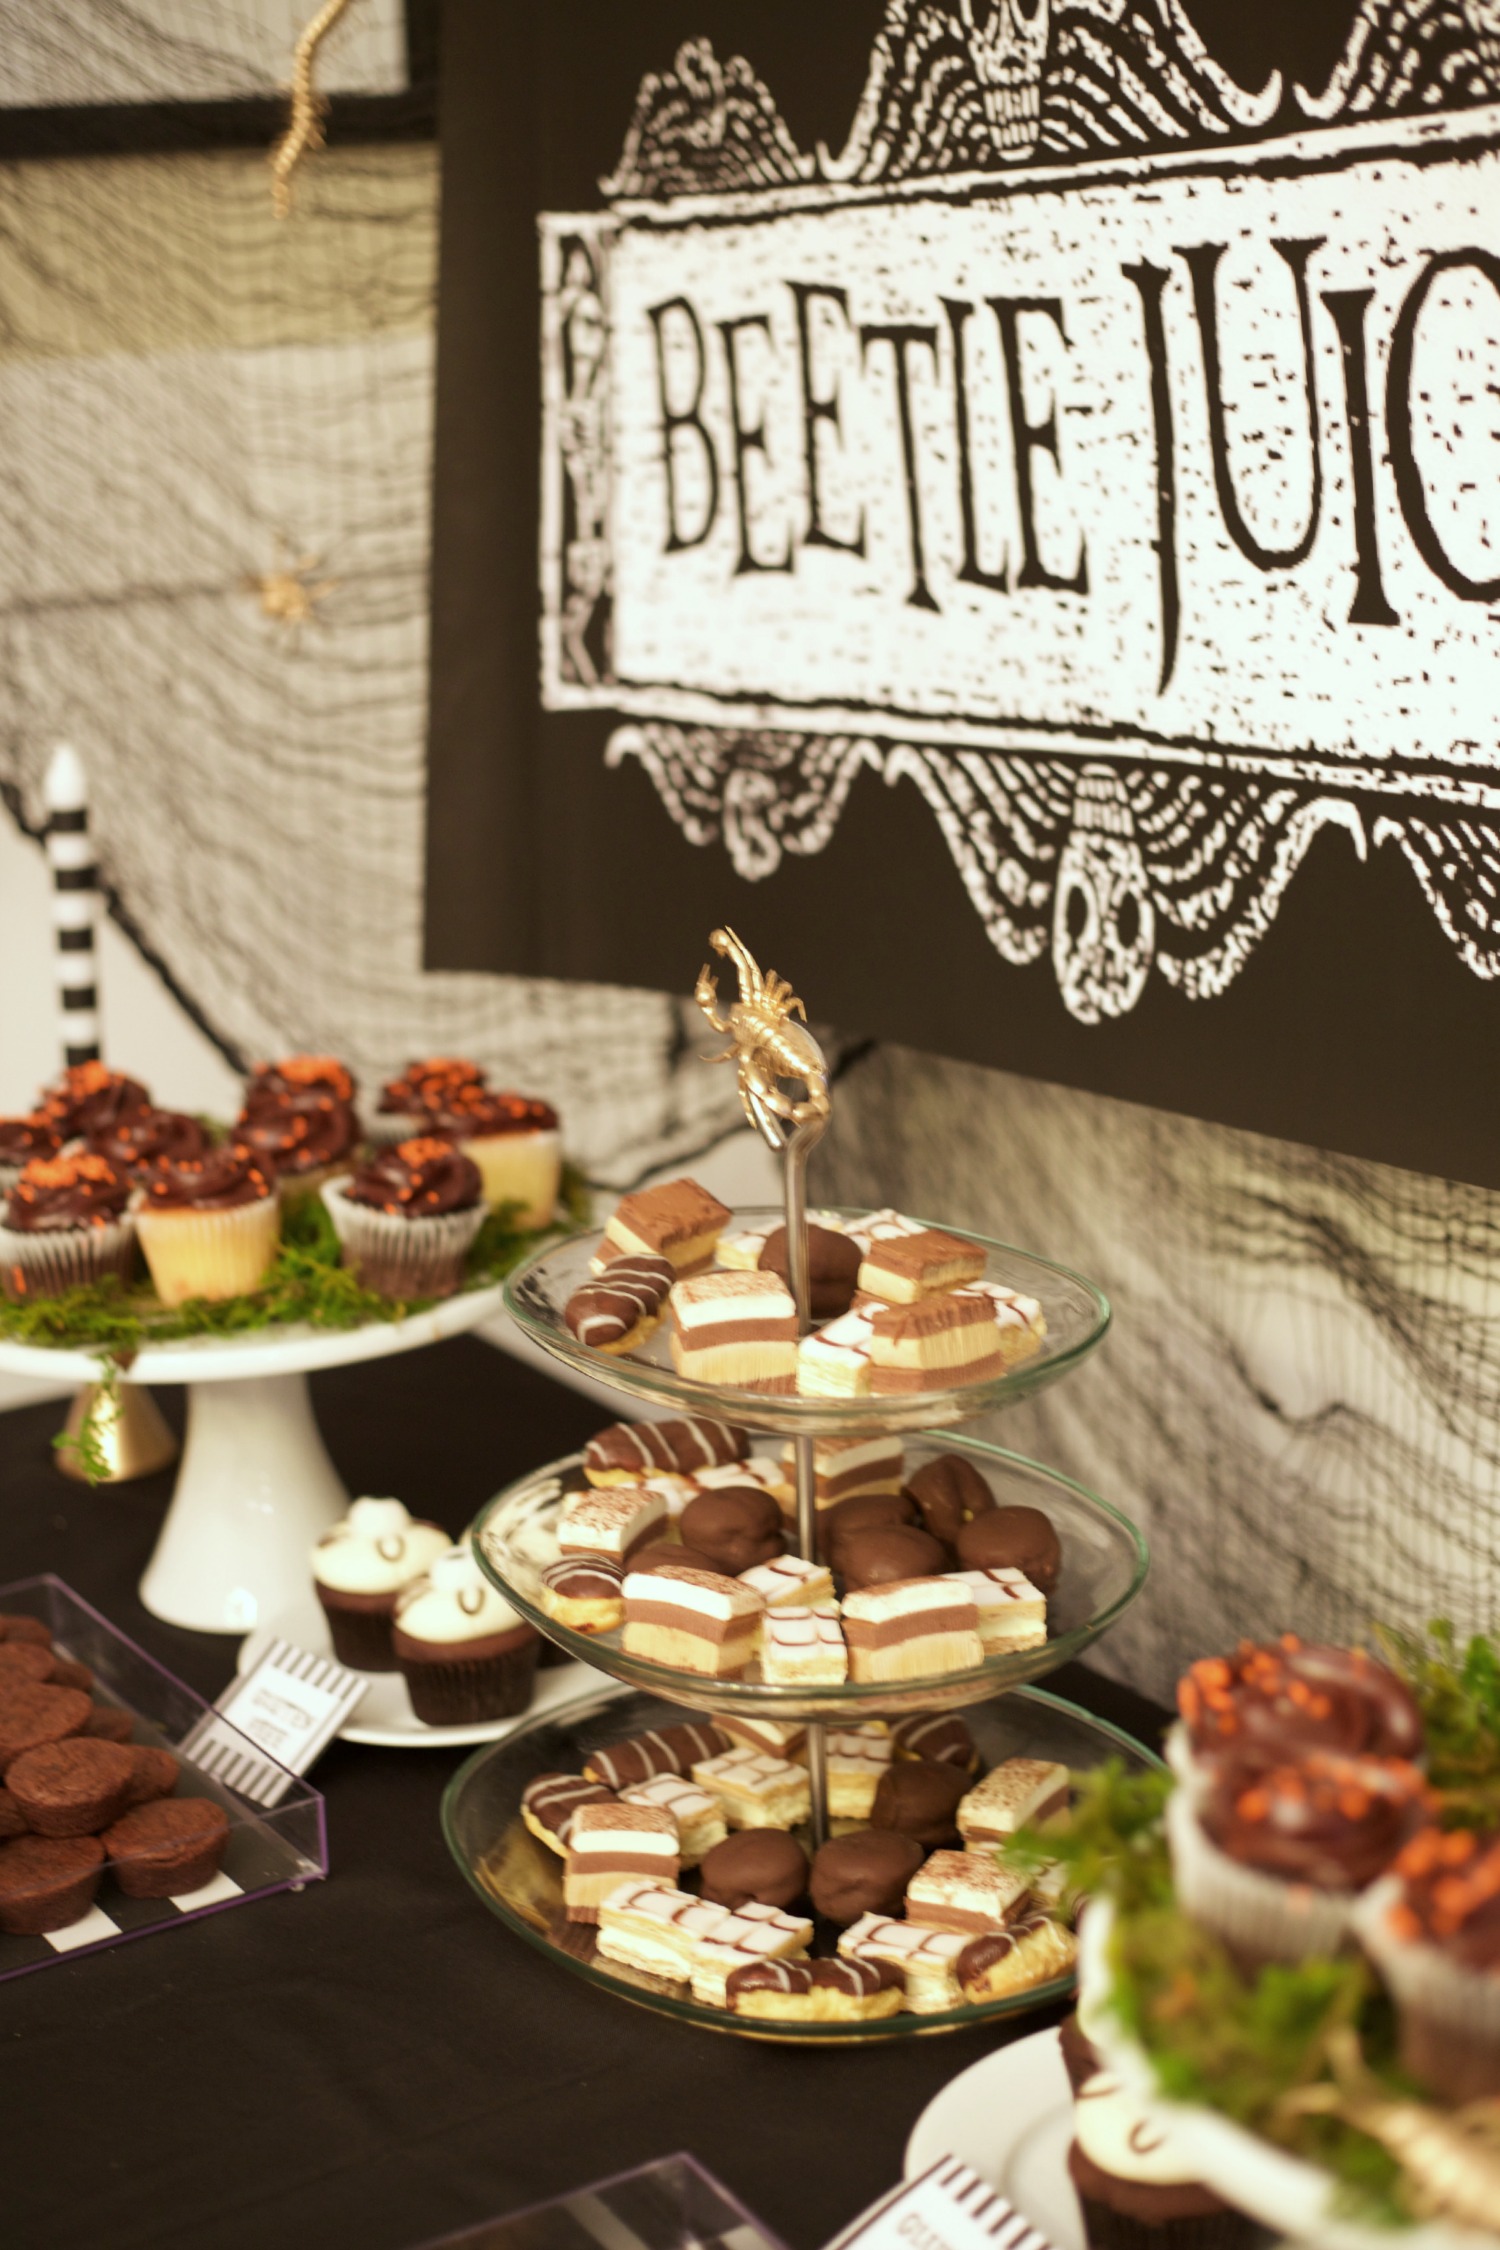  Beetlejuice Halloween Party | PartiesforPennies.com |  Dessert Table